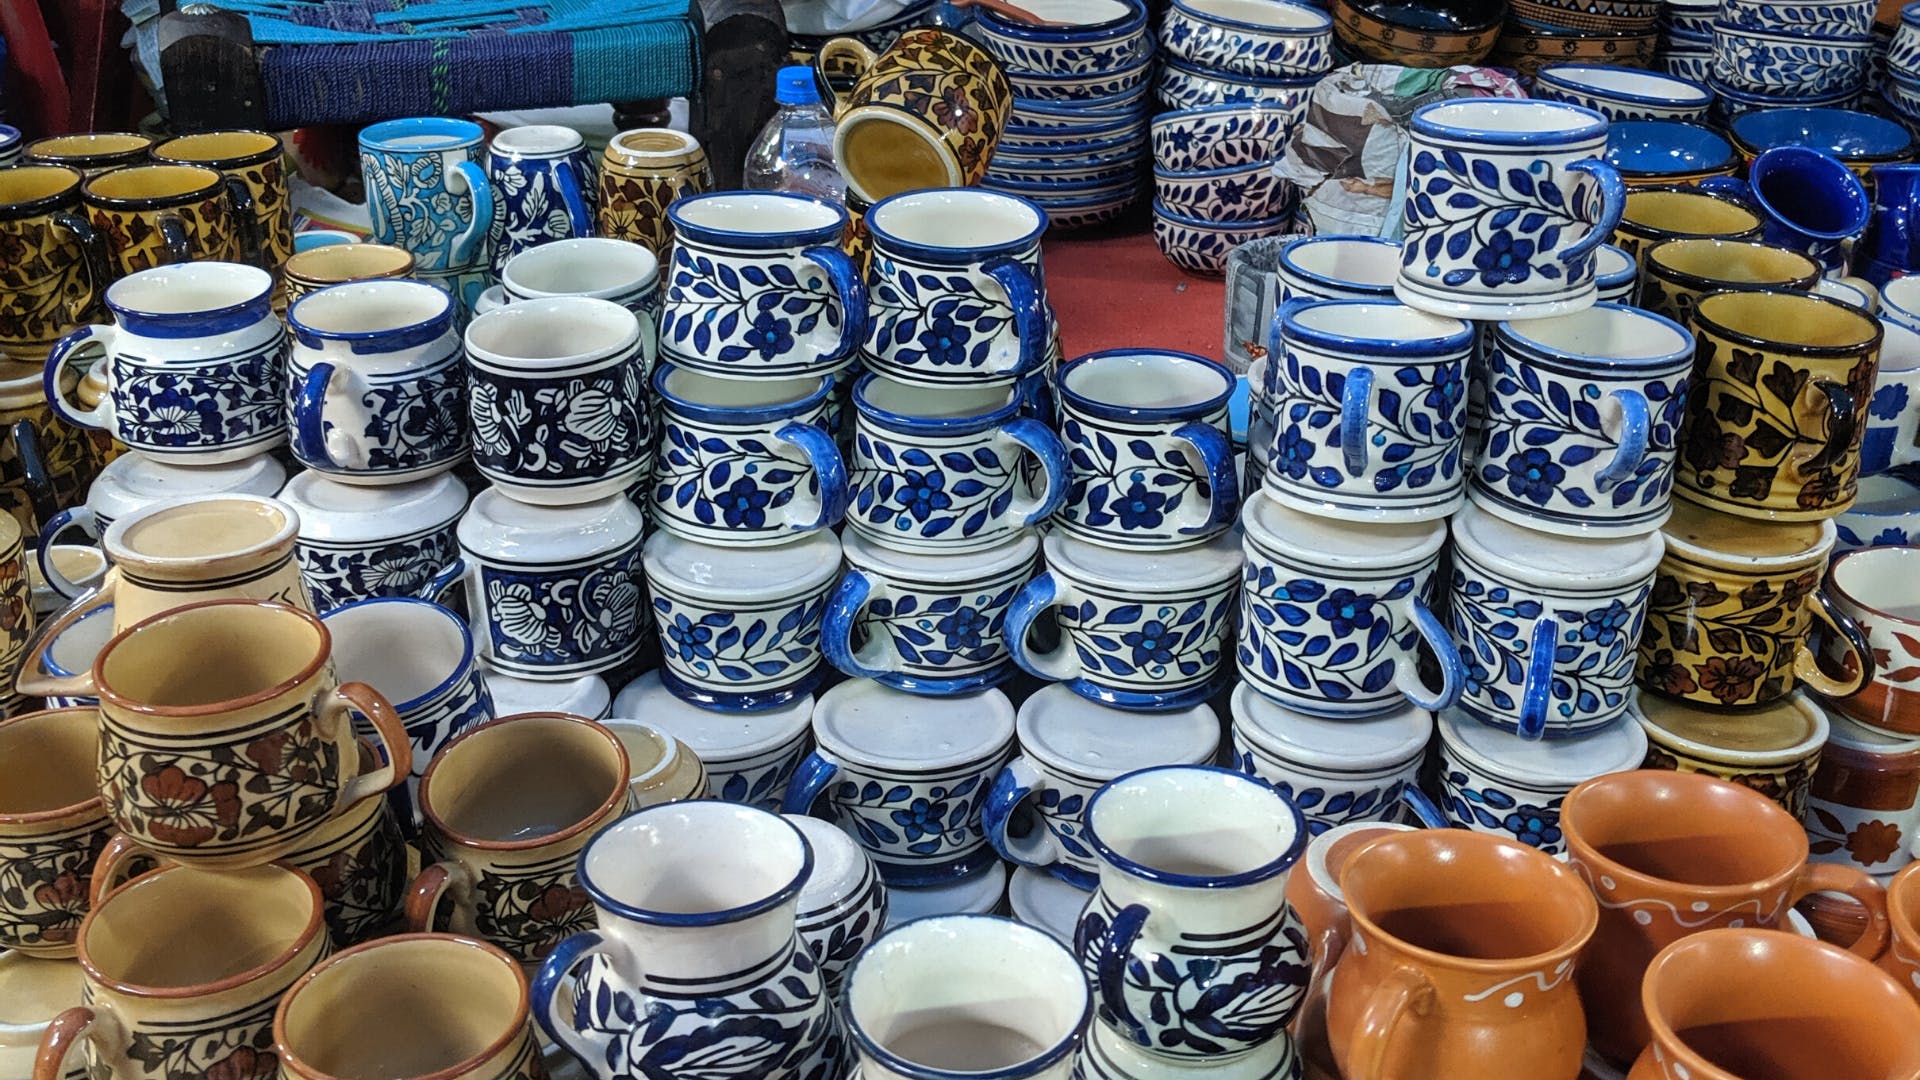 Porcelain,earthenware,Ceramic,Blue and white porcelain,Pottery,Tableware,Dinnerware set,Serveware,Dishware,Art